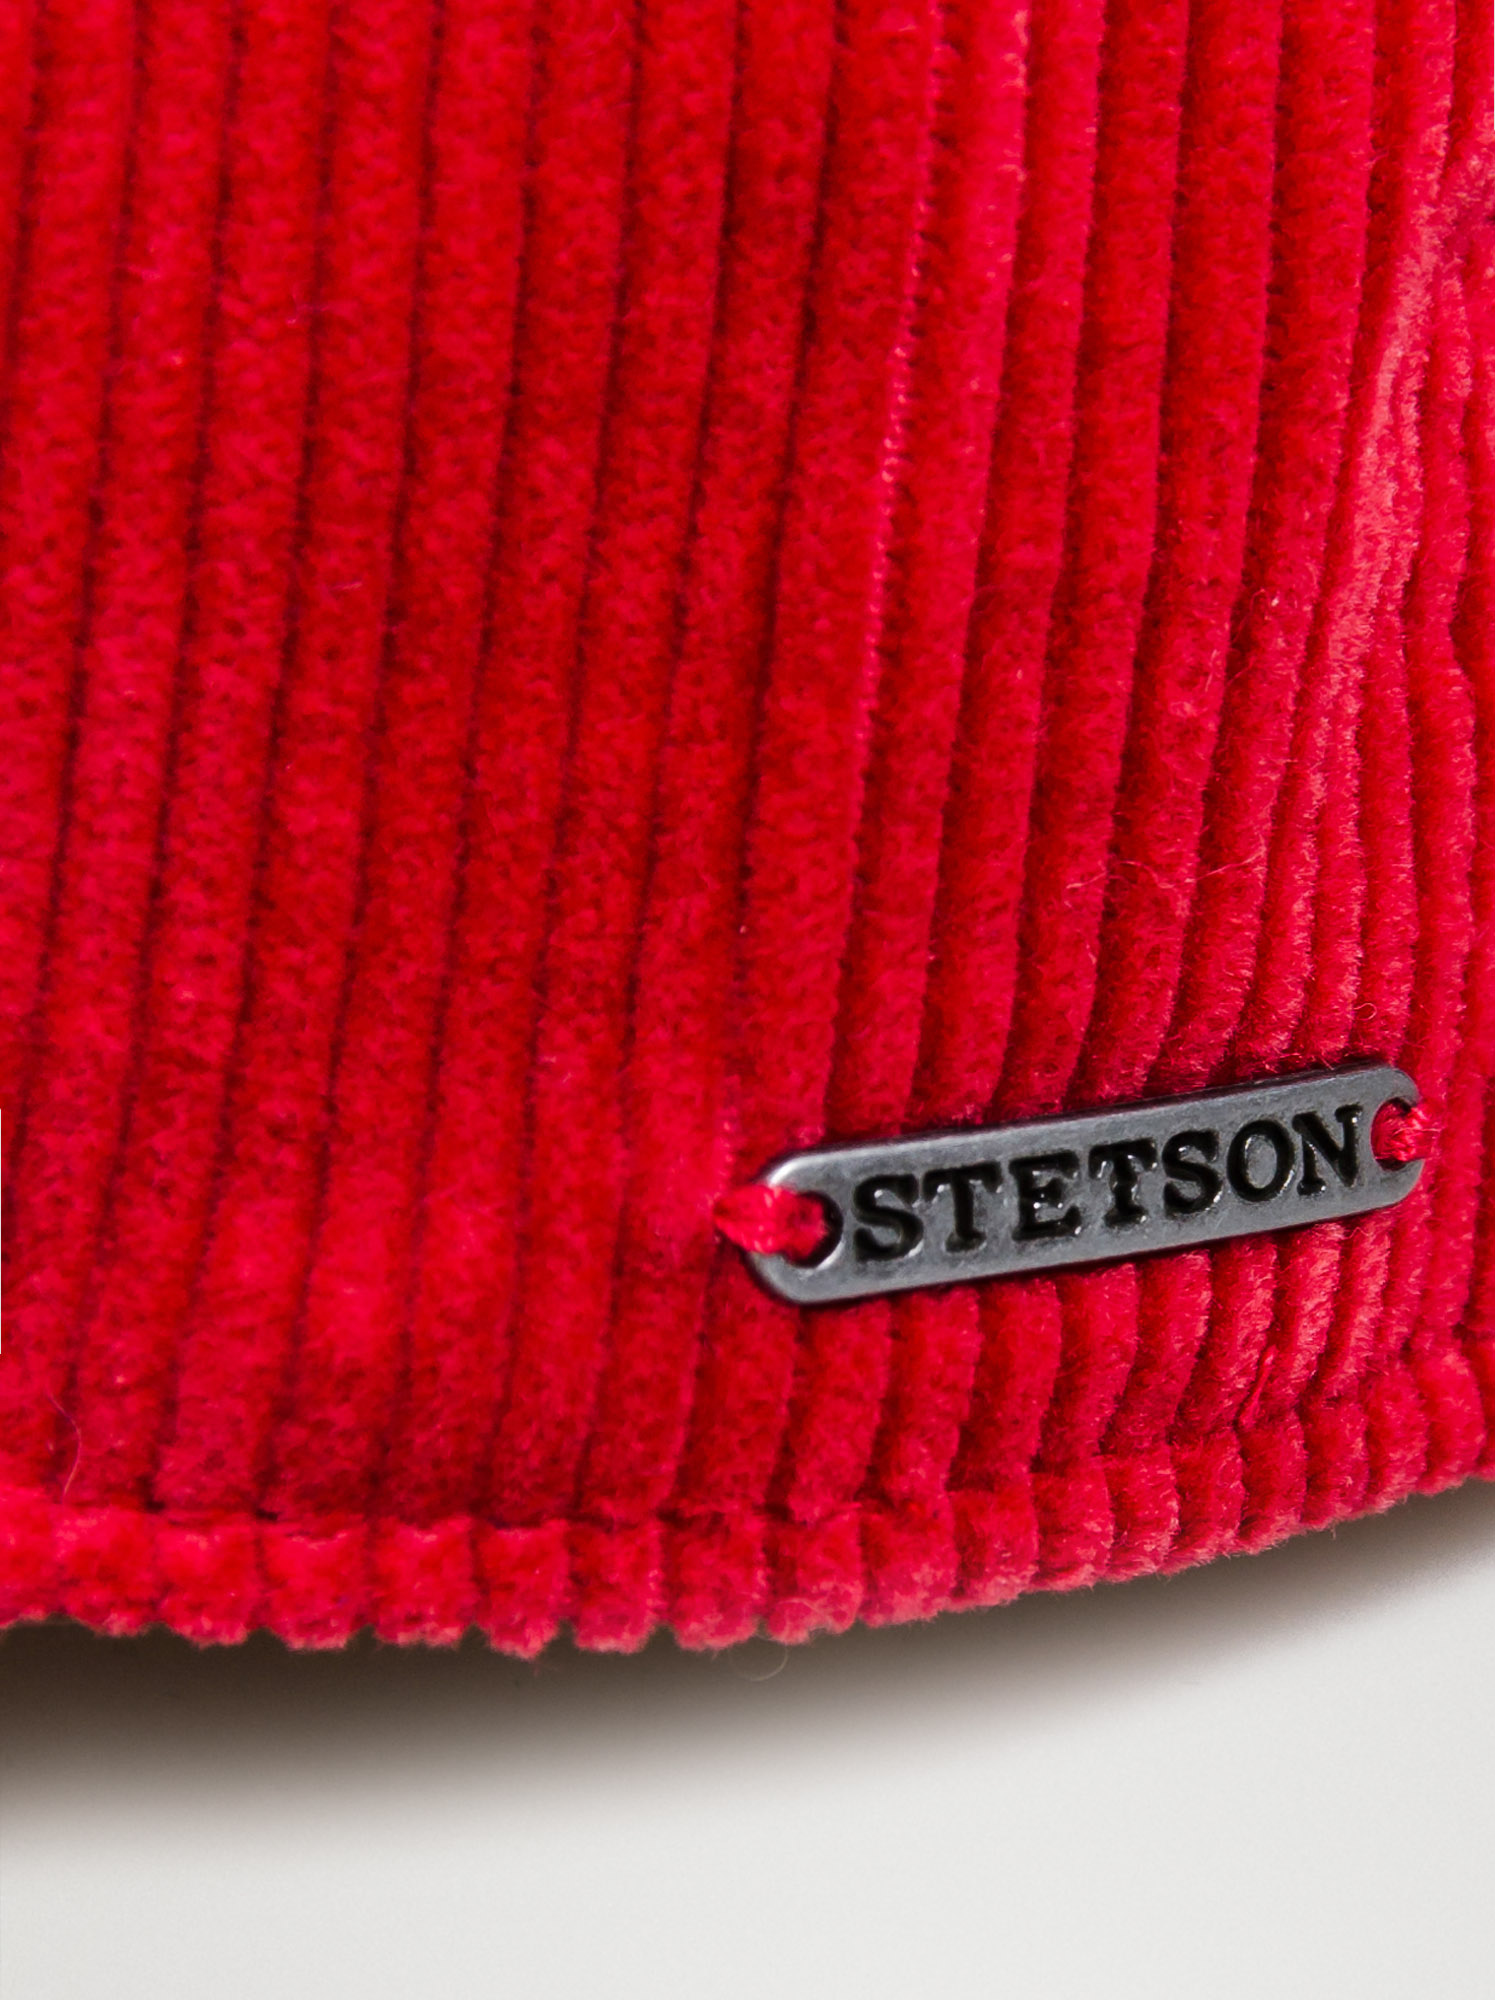 STETSON Red Baseball Cap Cord L - Stetson image 3